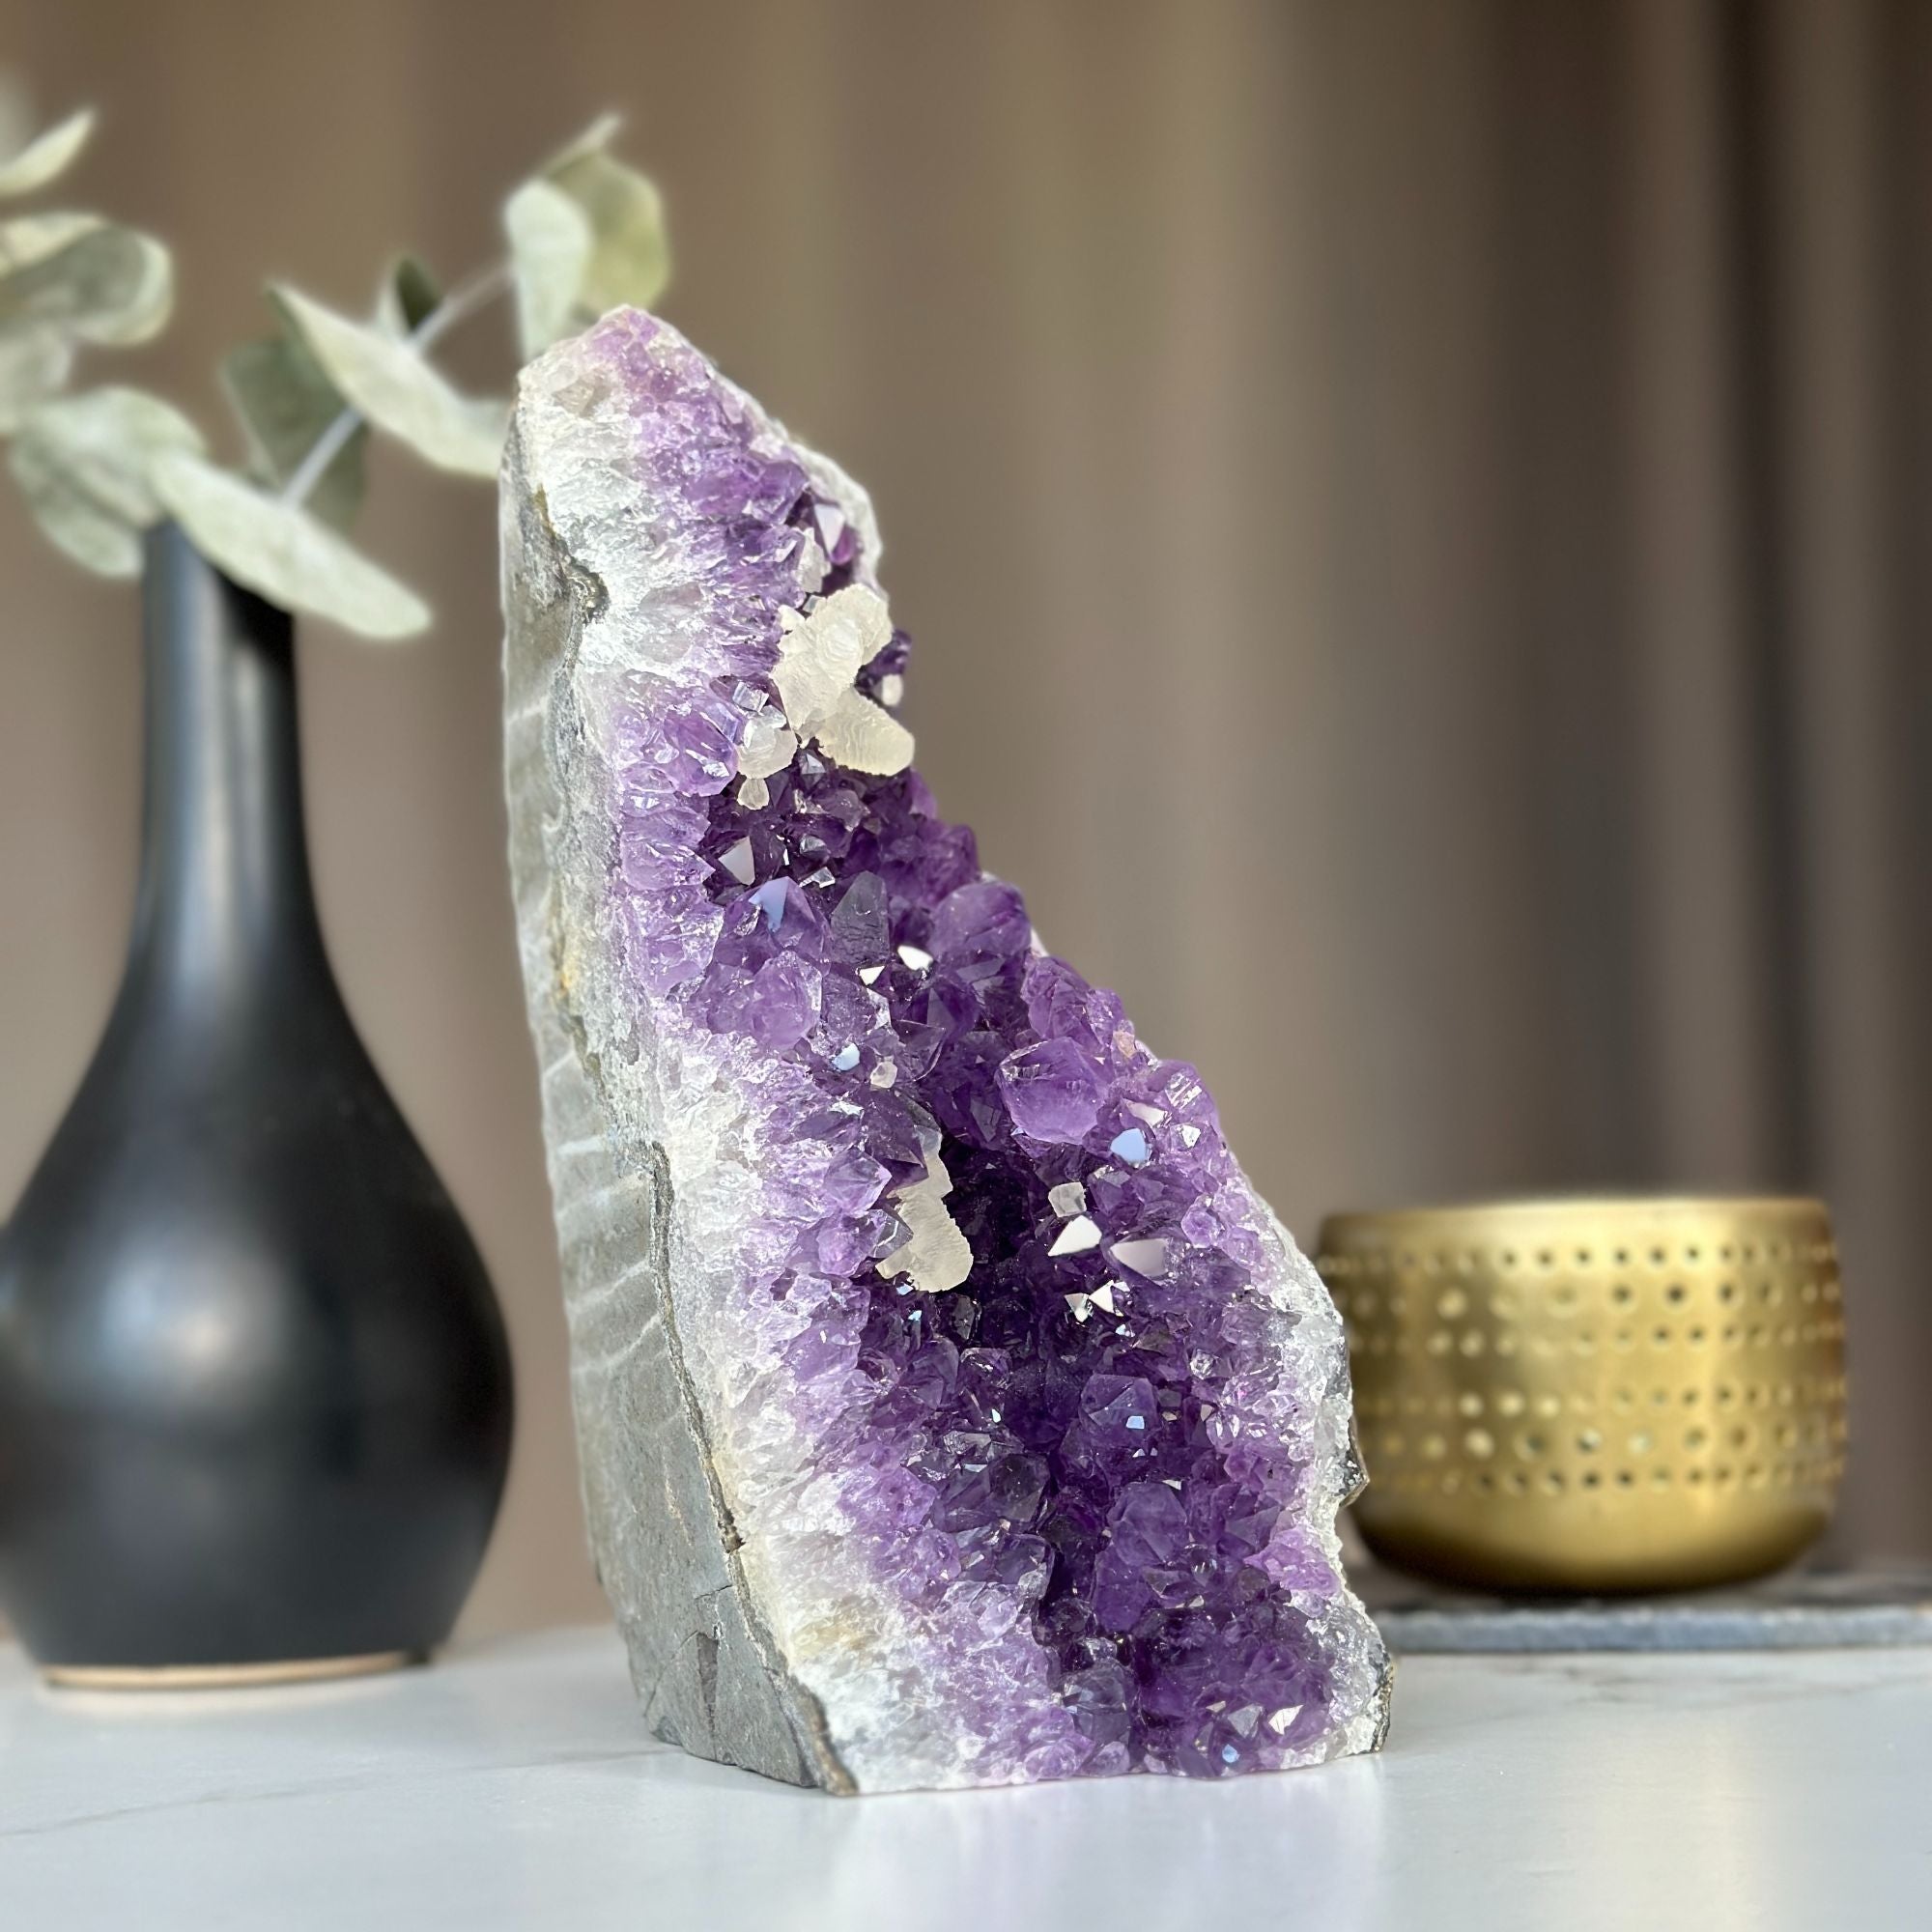 Galaxy amethyst geode, huge crystal decor (8 inches tall), Deep Purple natural amethyst